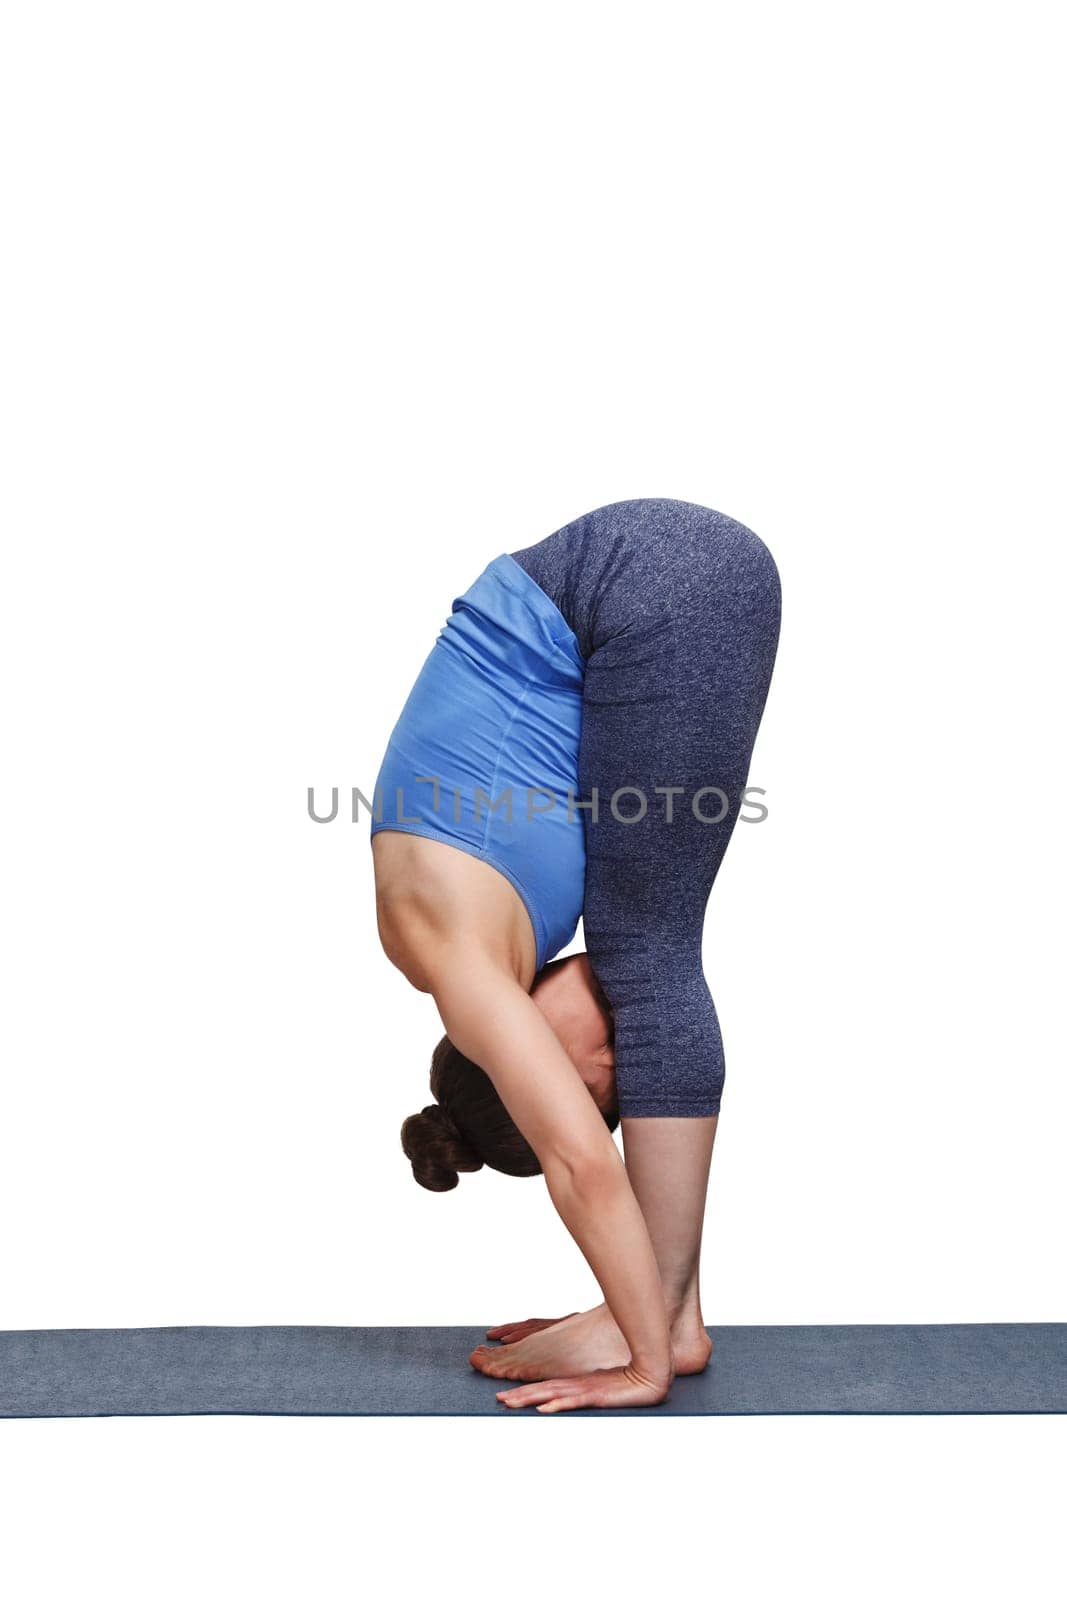 Woman doing yoga asana Uttanasana - standing forward bend by dimol